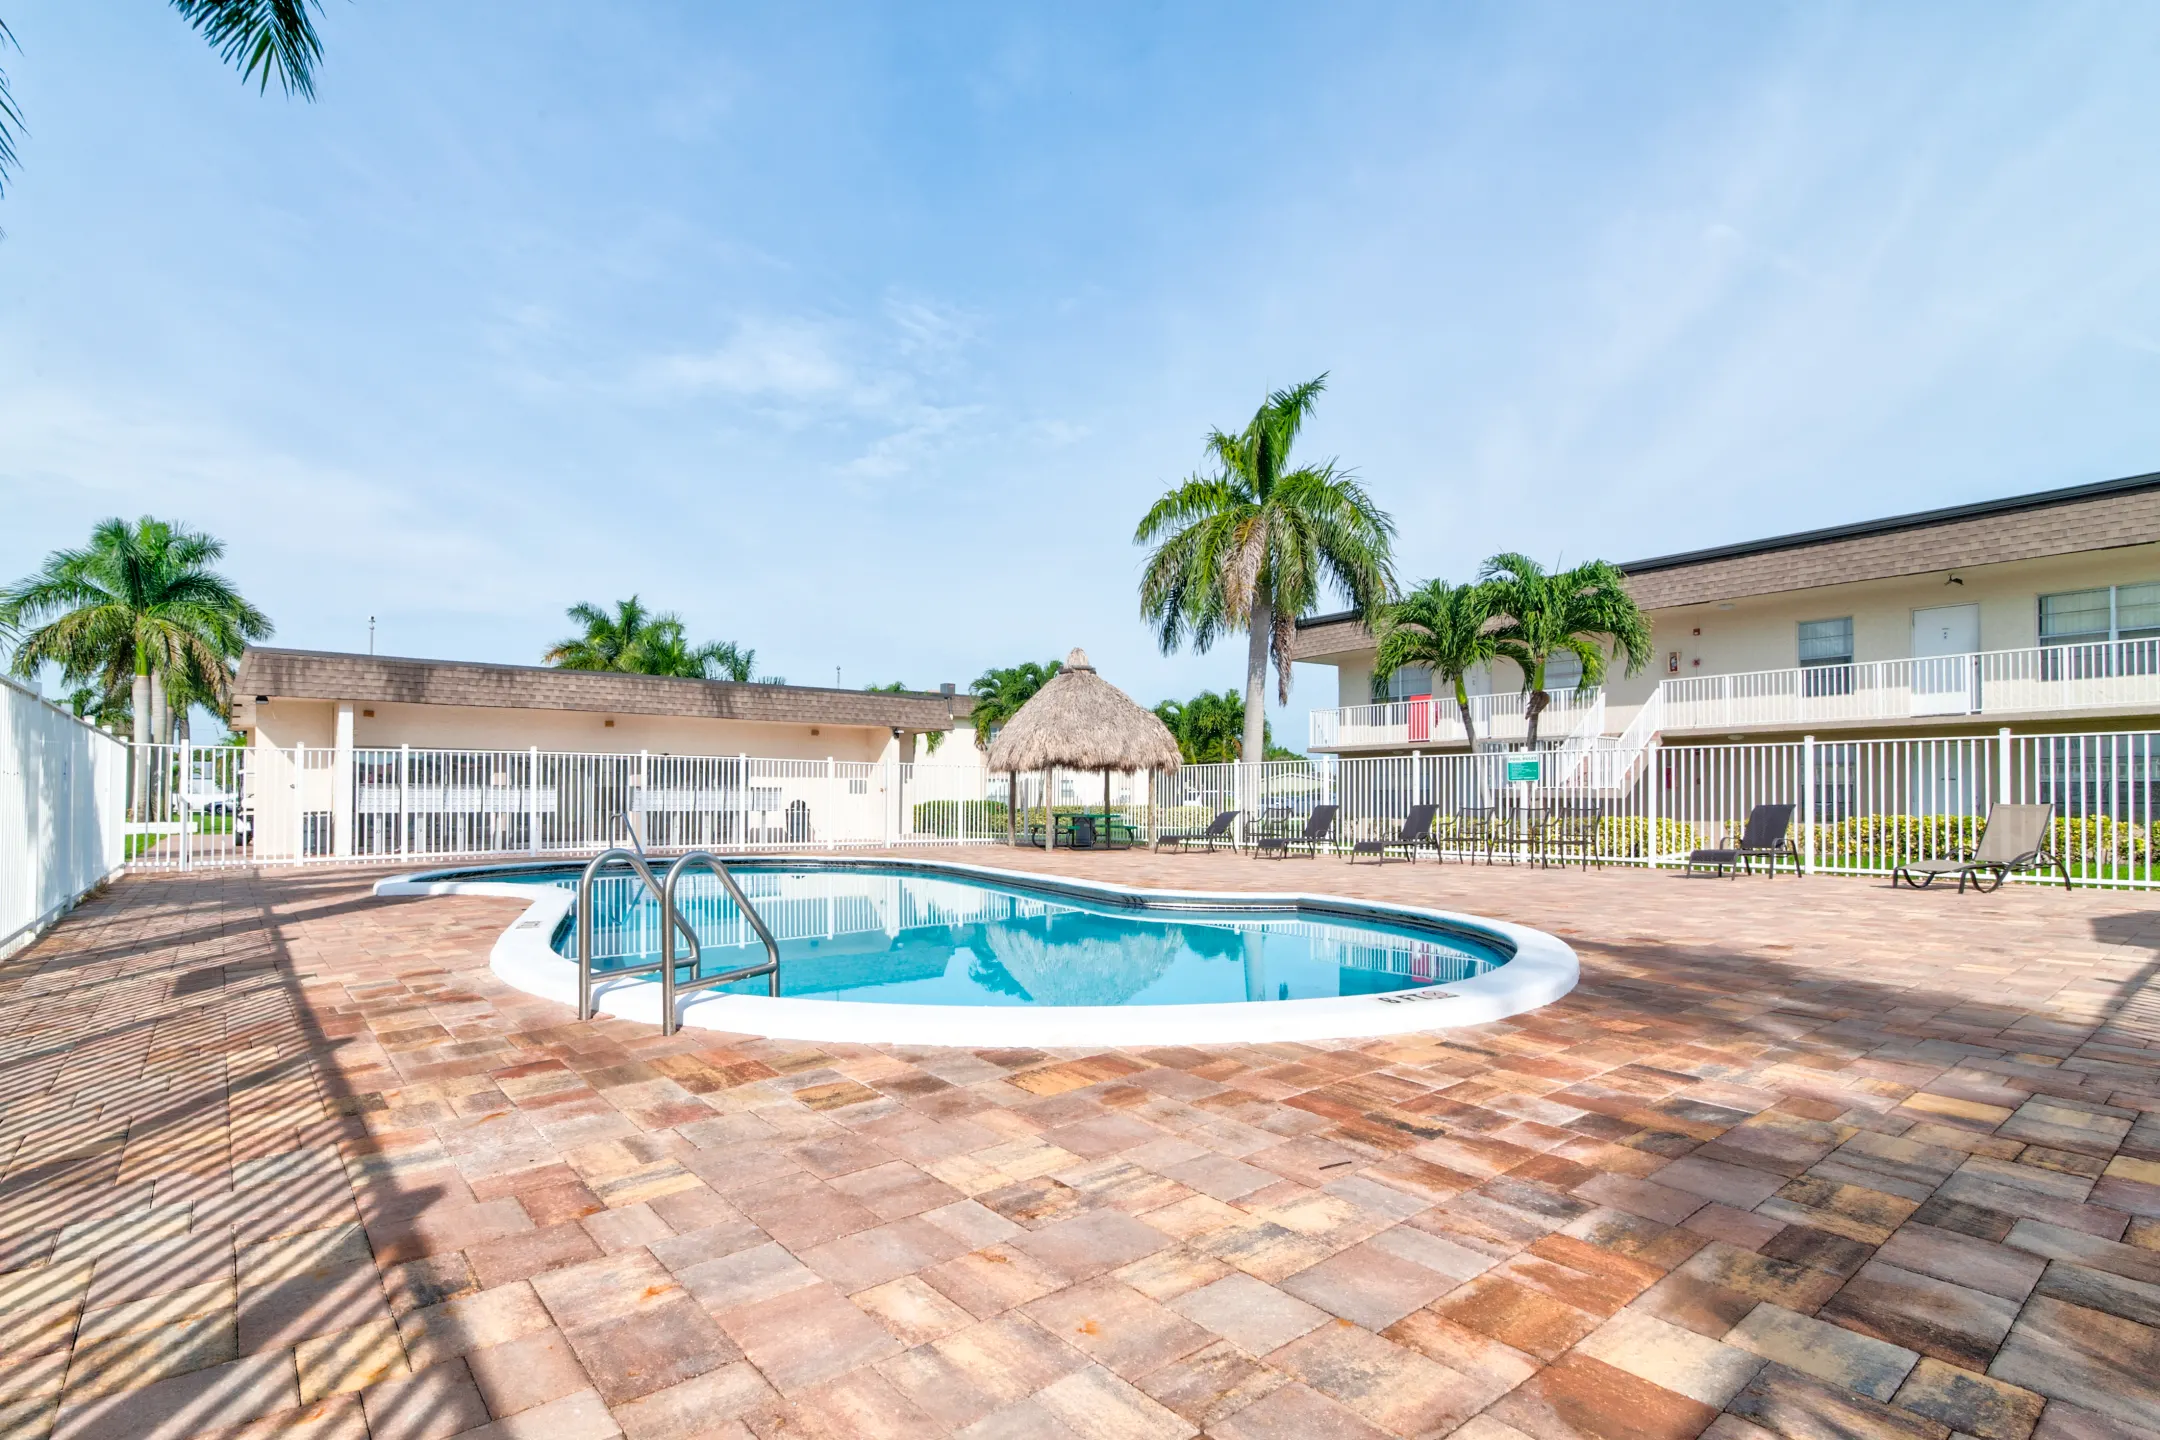 Pool - Lauder Ridge Garden - North Lauderdale, FL